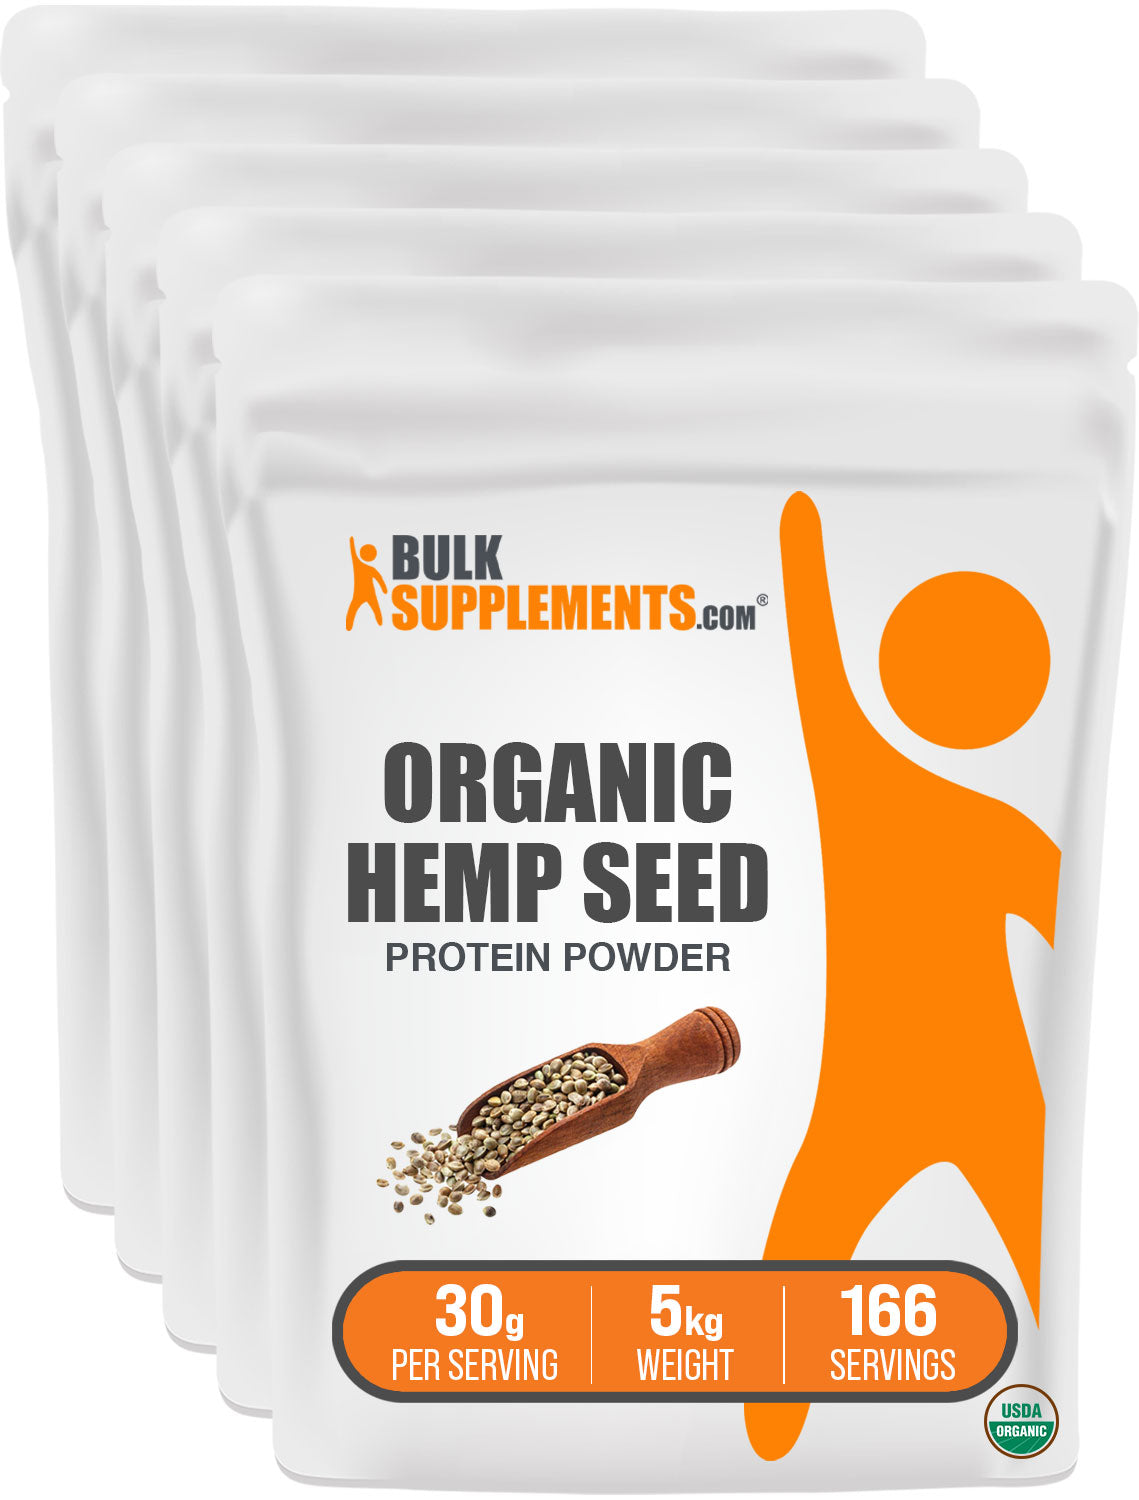 BulkSupplements Organic Hemp Seed Protein Powder 5kg bags